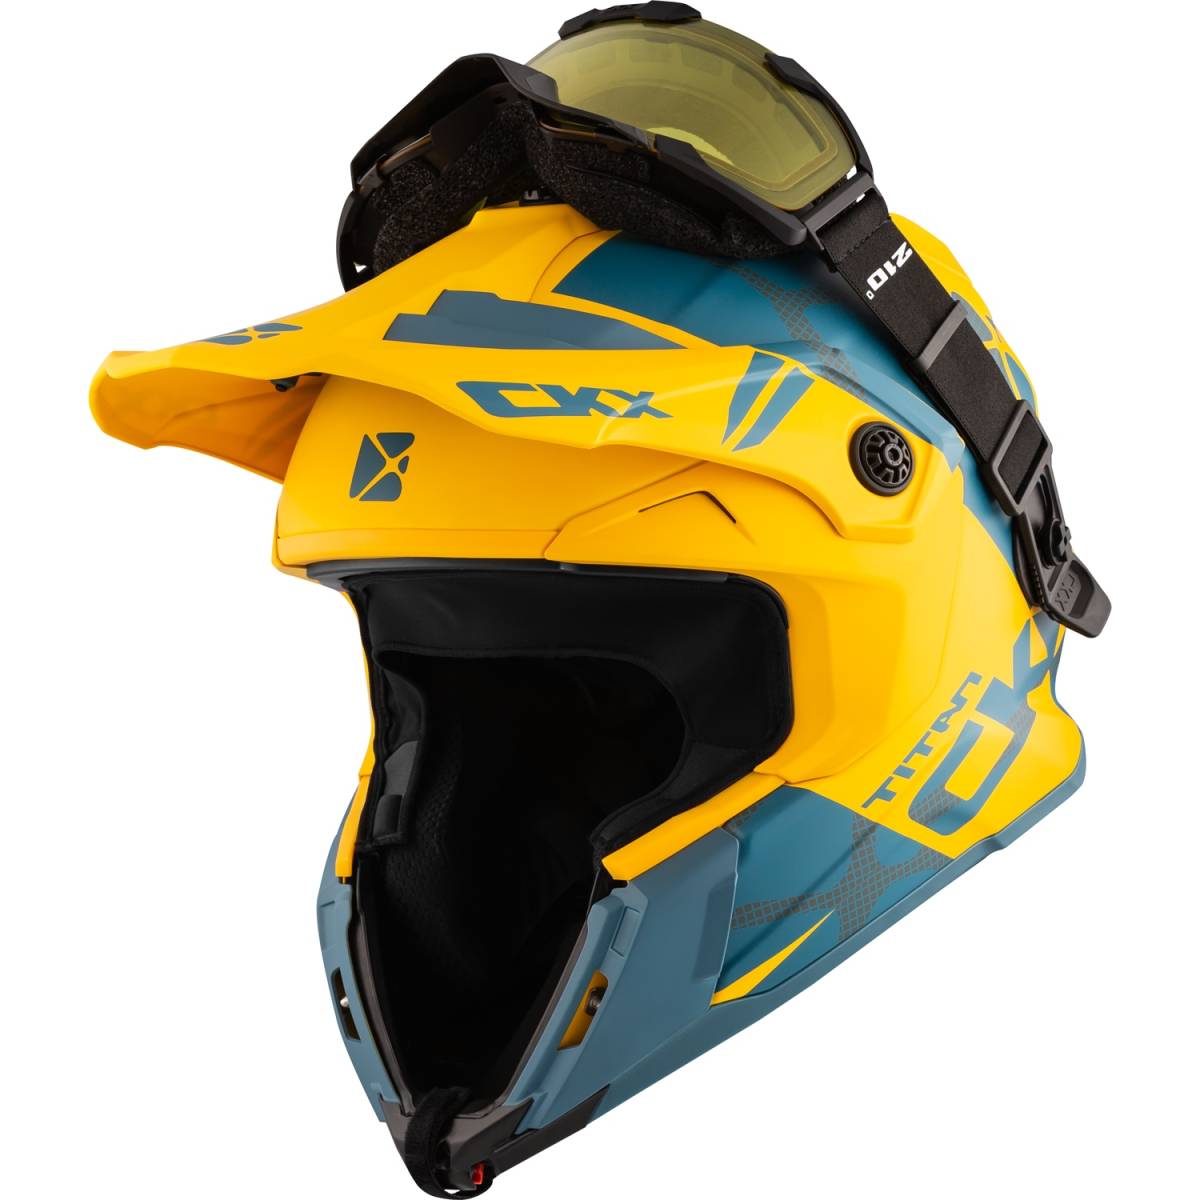 Шлем для езды на снегоходе, разновидности шлемов